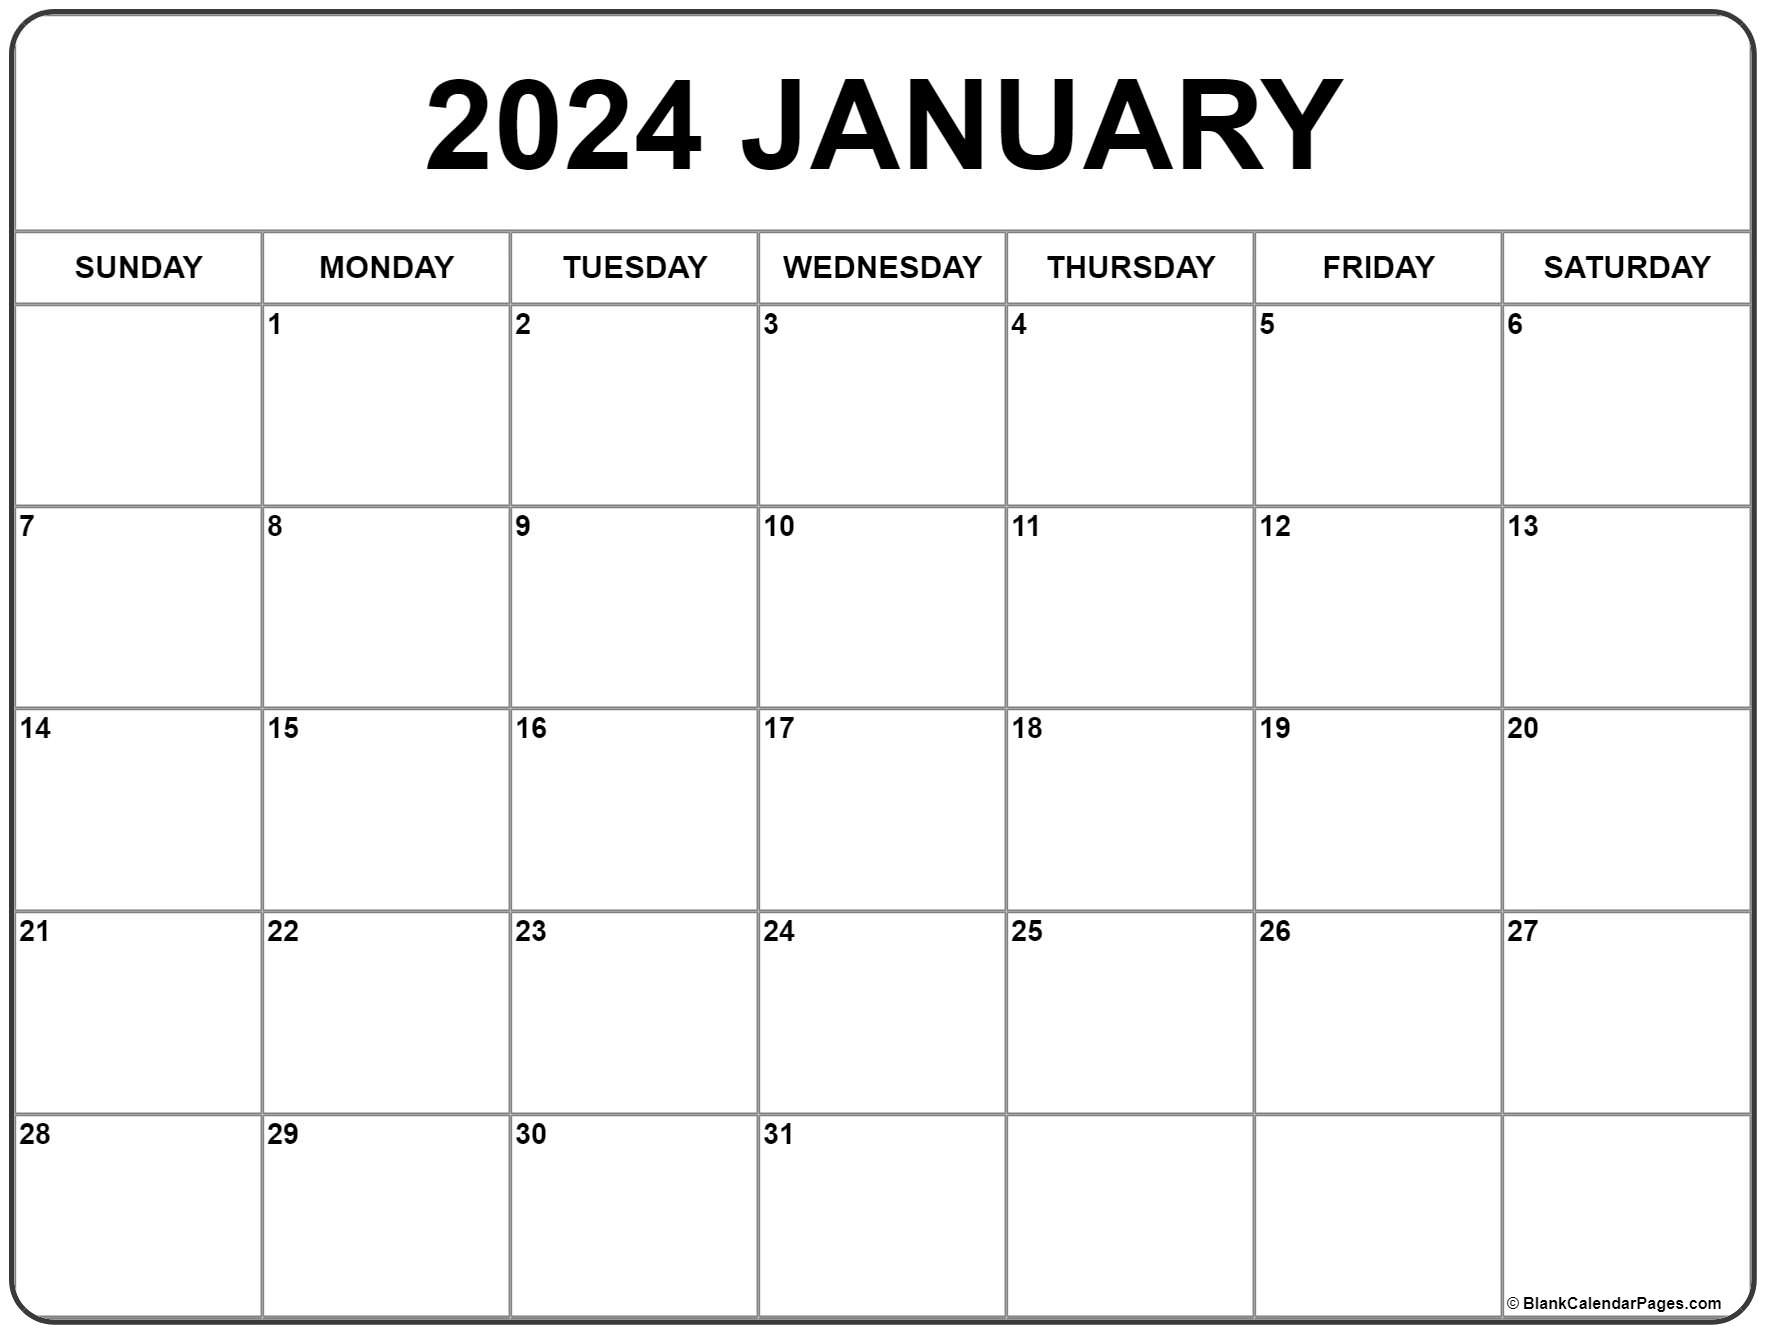 January 2024 Calendar | Free Printable Calendar for Printable Calendar Page January 2024